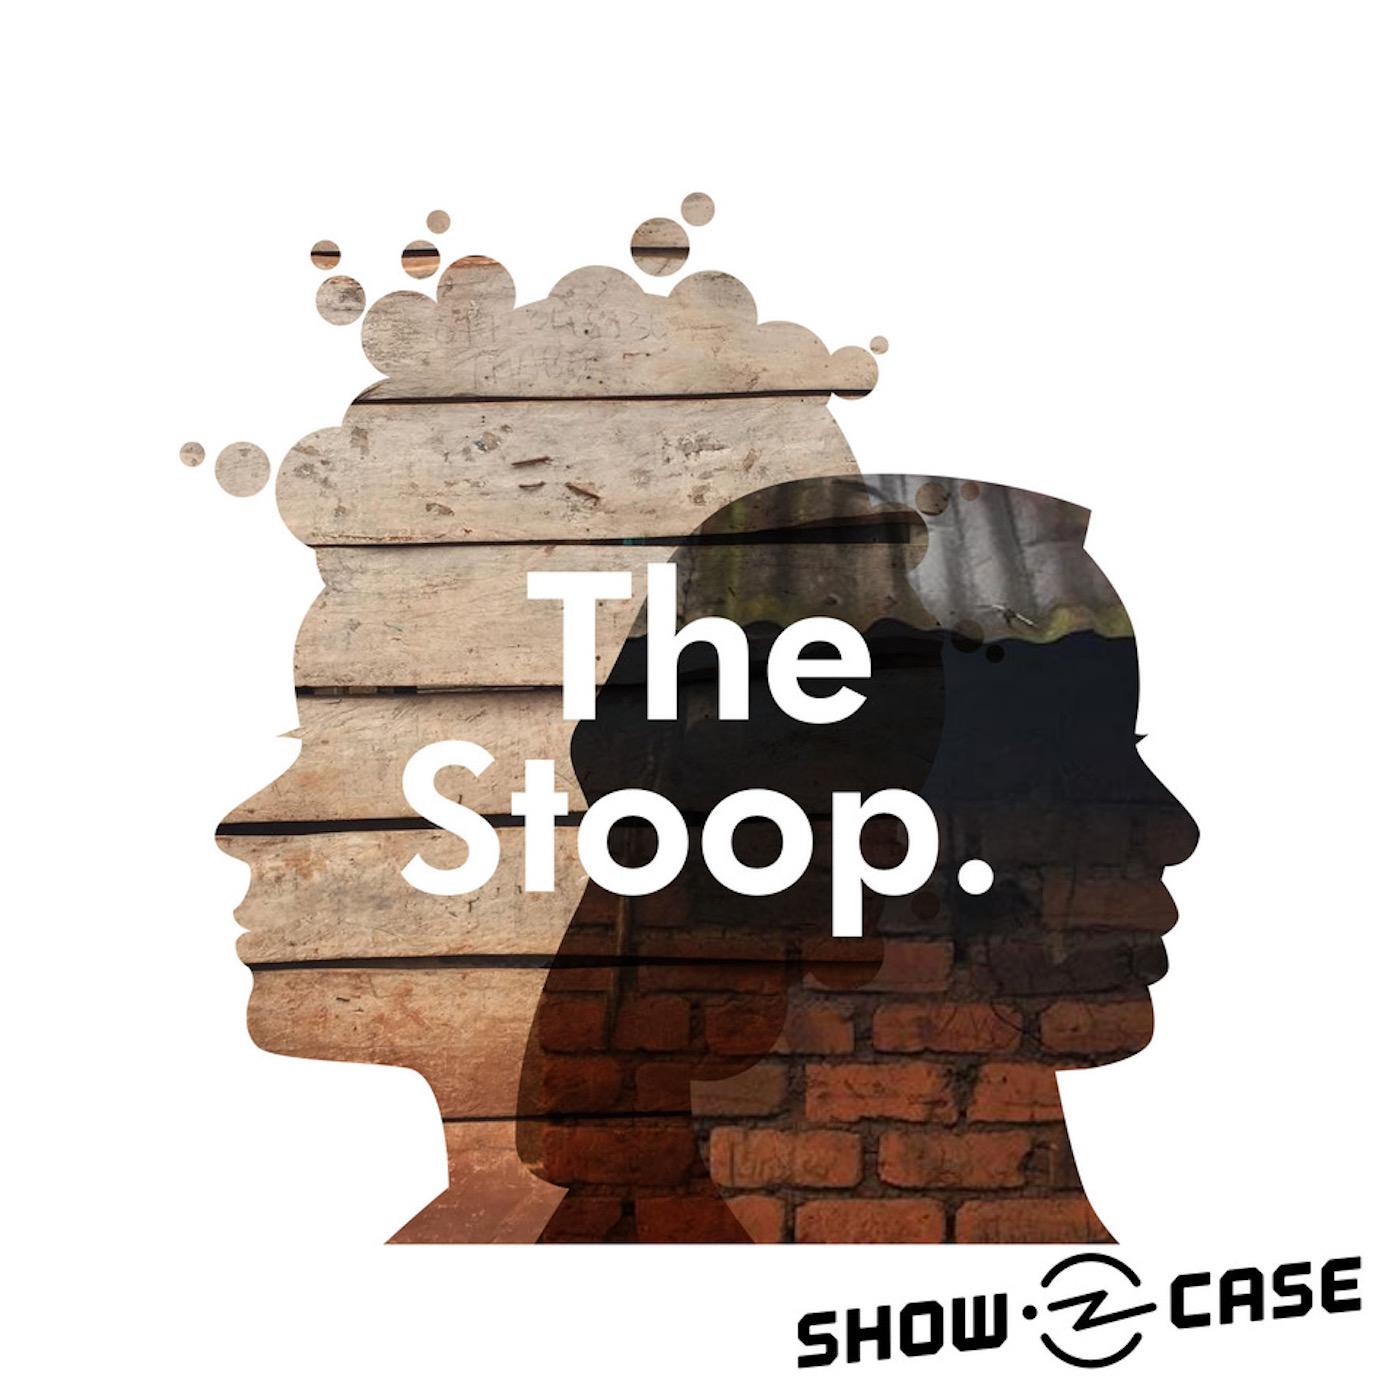 Thumbnail for "Next on Showcase: The Stoop".